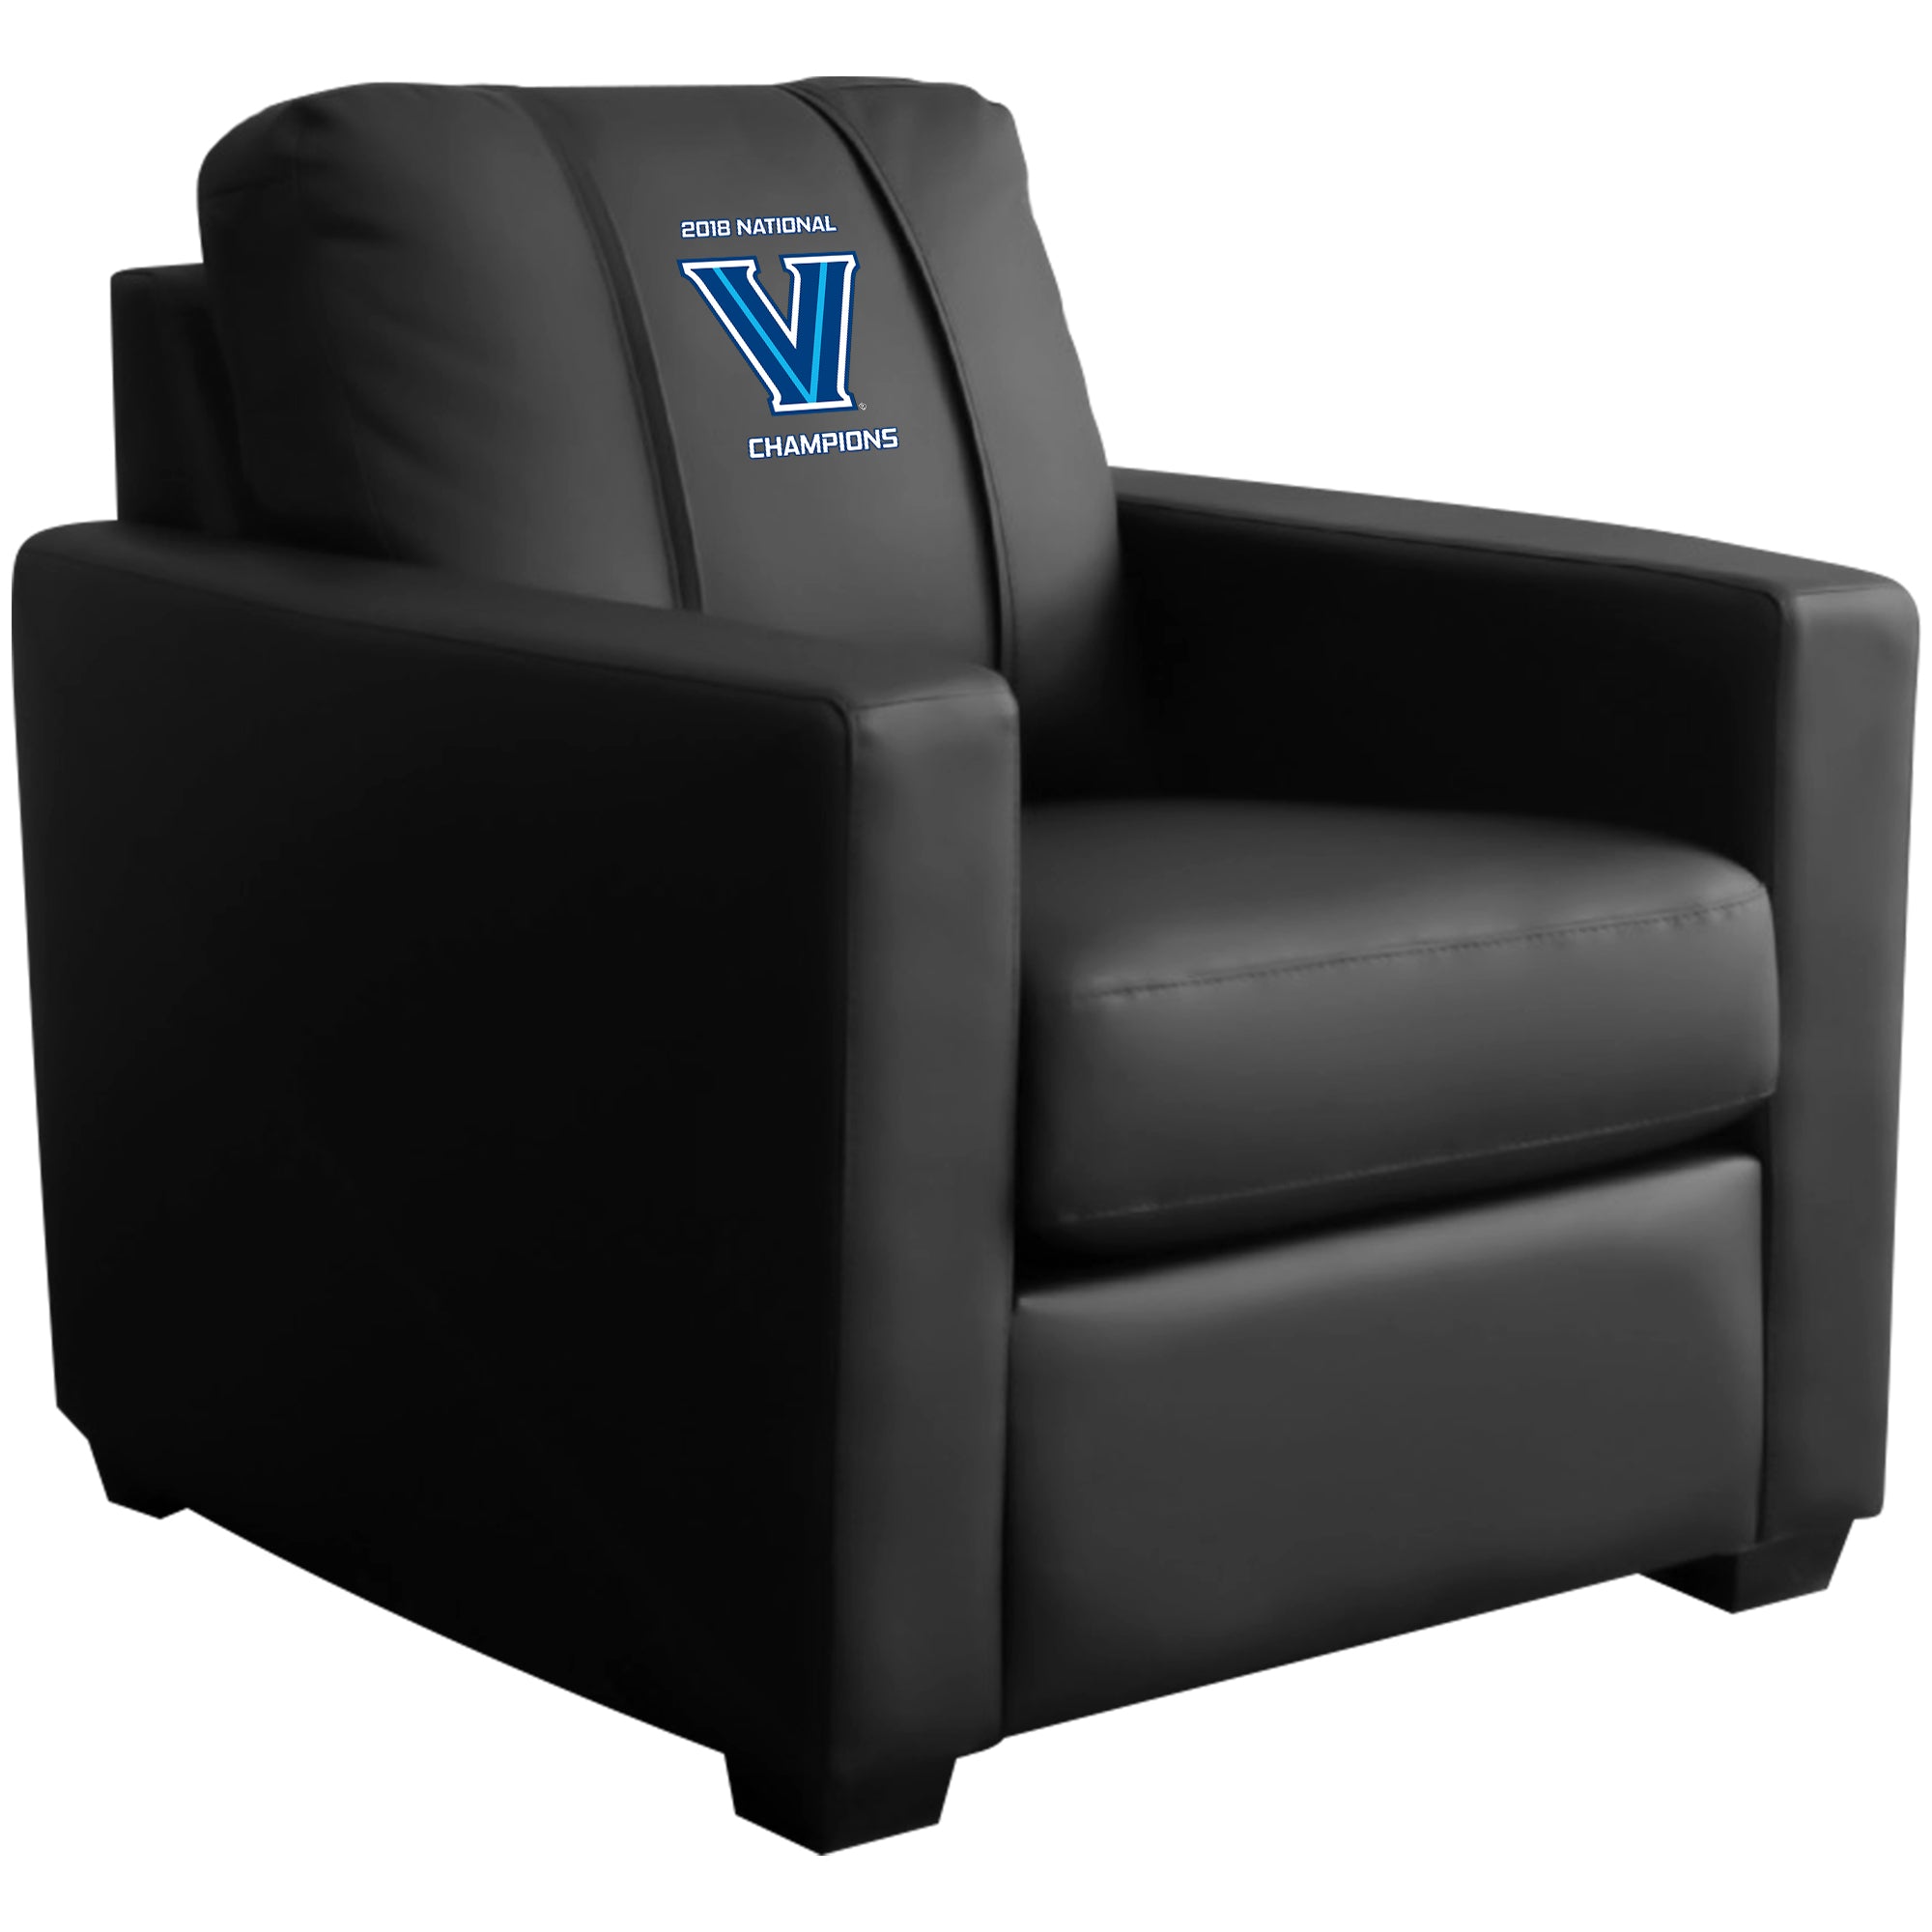 Villanova Silver Club Chair with Villanova Championship Logo Panel